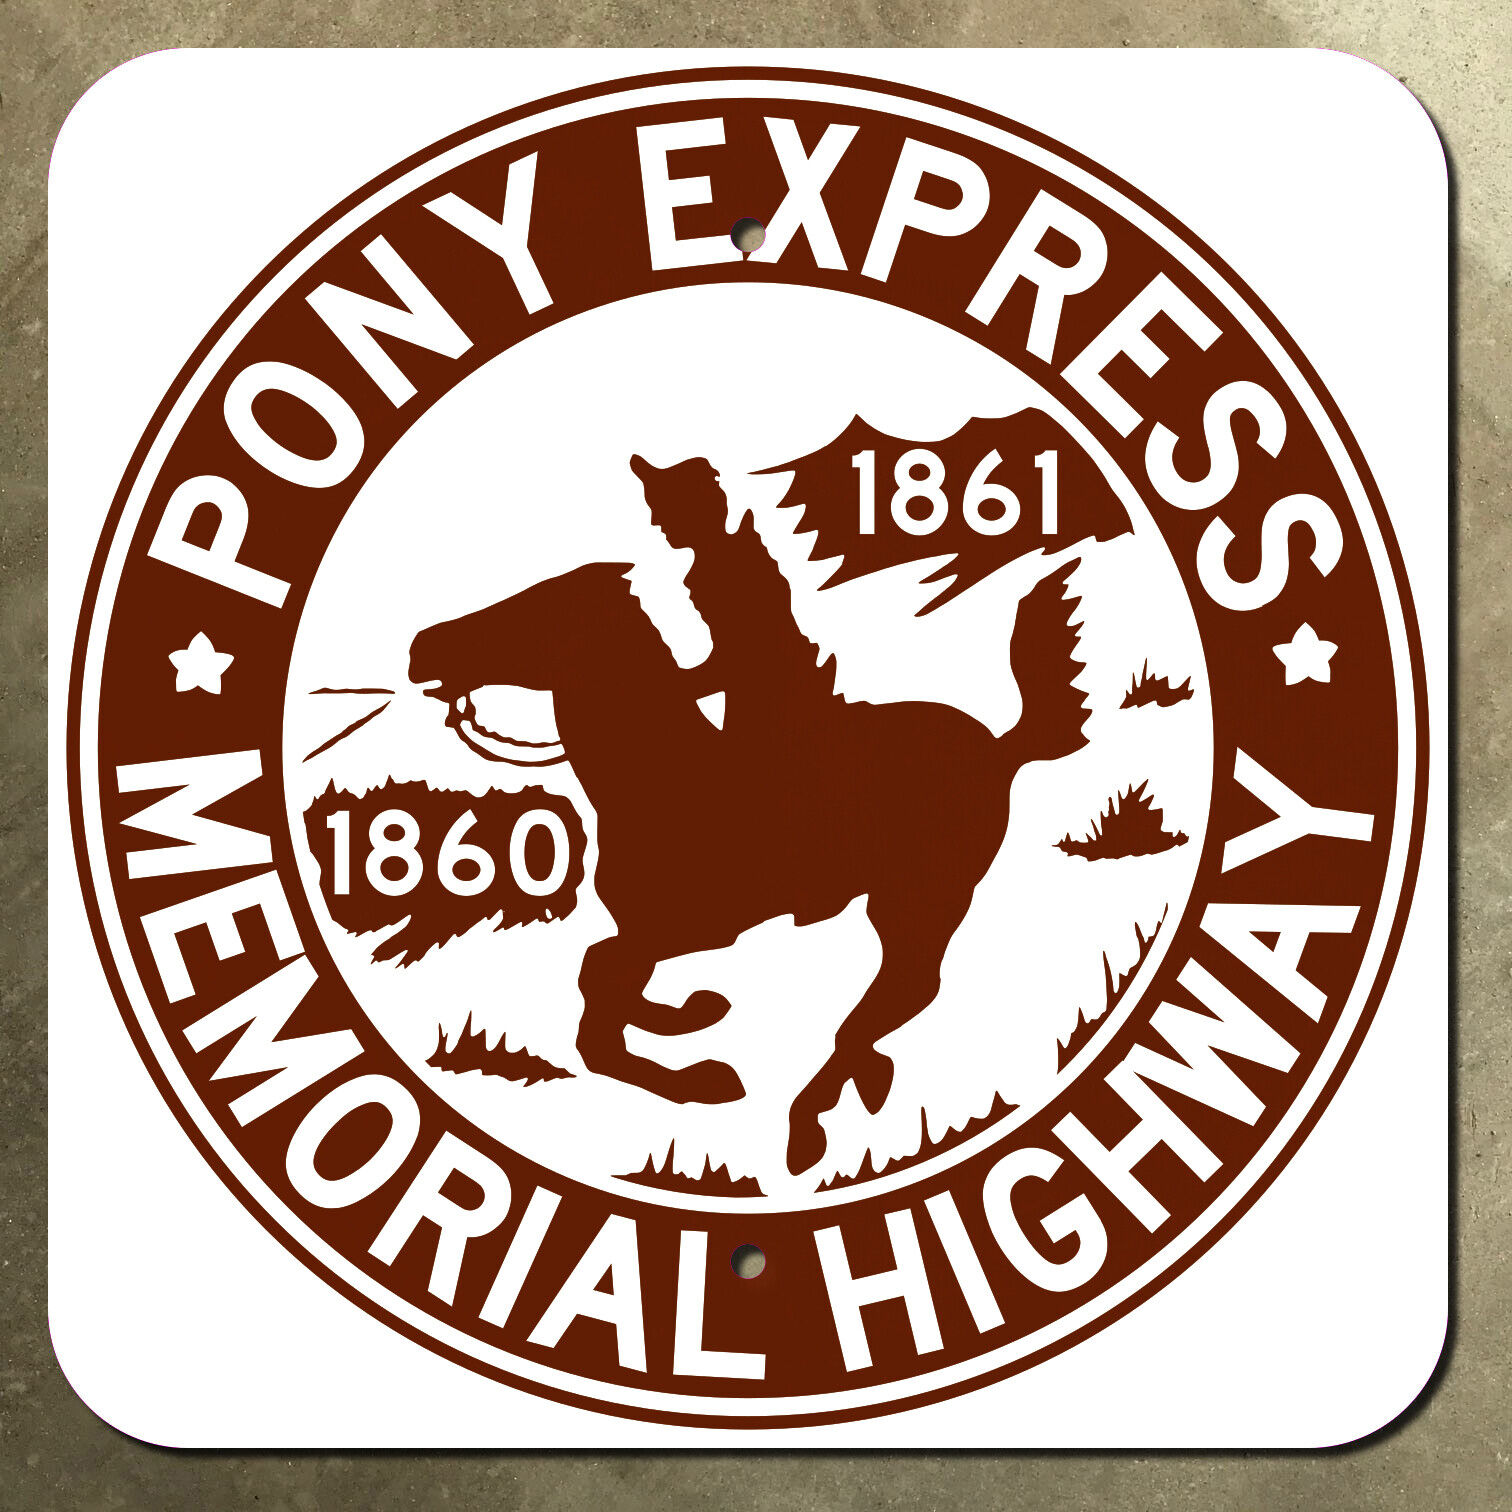 Kansas Pony Express Memorial Highway Marysville marker road sign 1860 1861 12x12